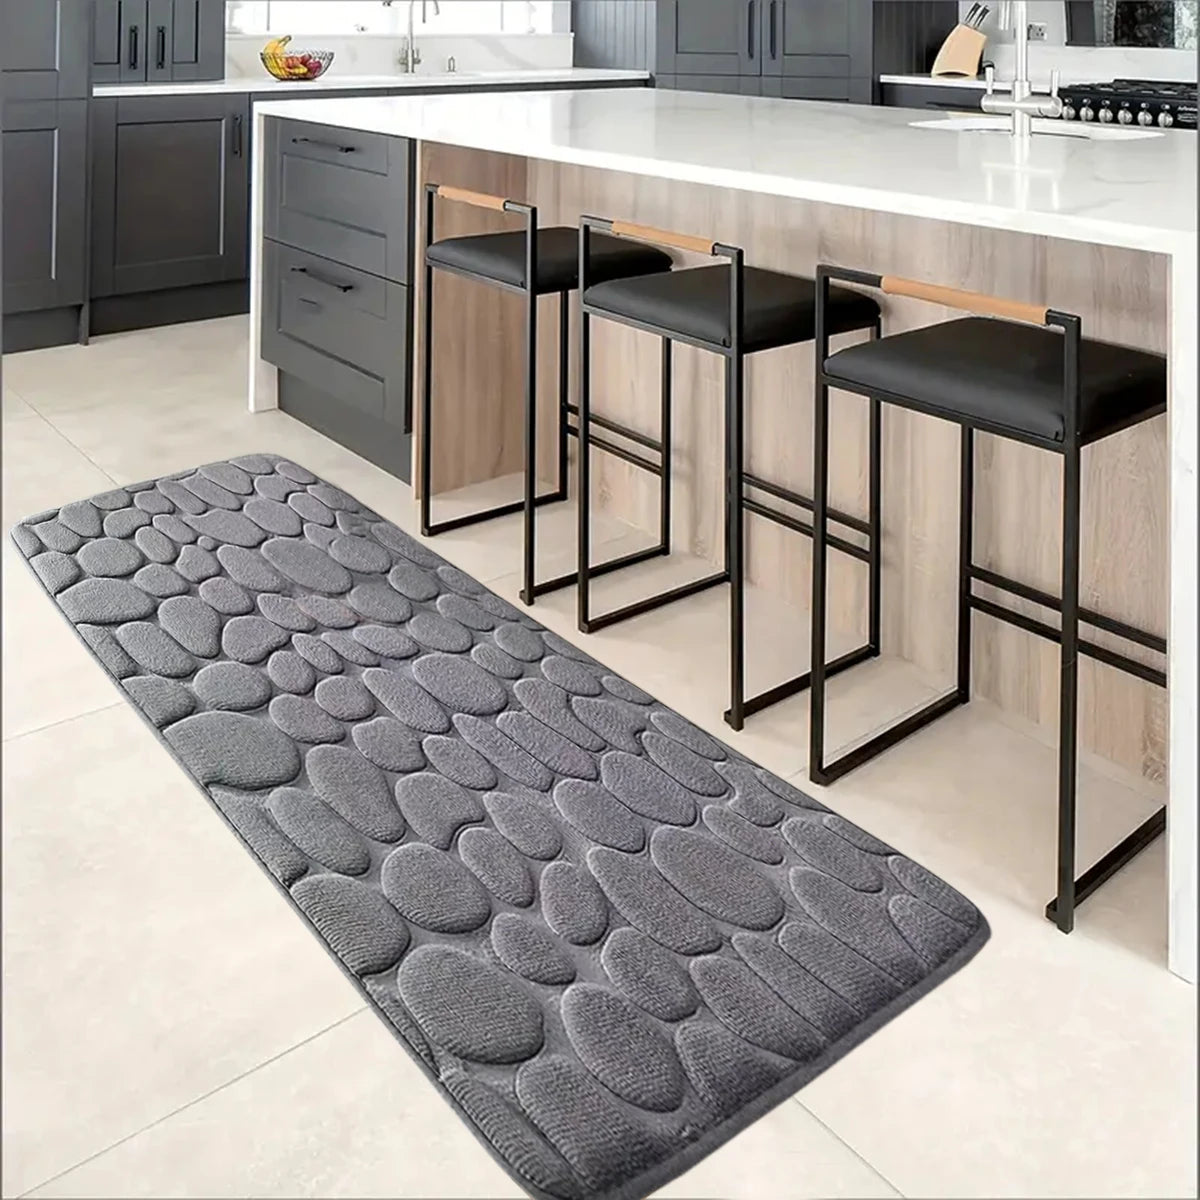 Large size kitchen carpet non slip absorbent kitchen floor mat